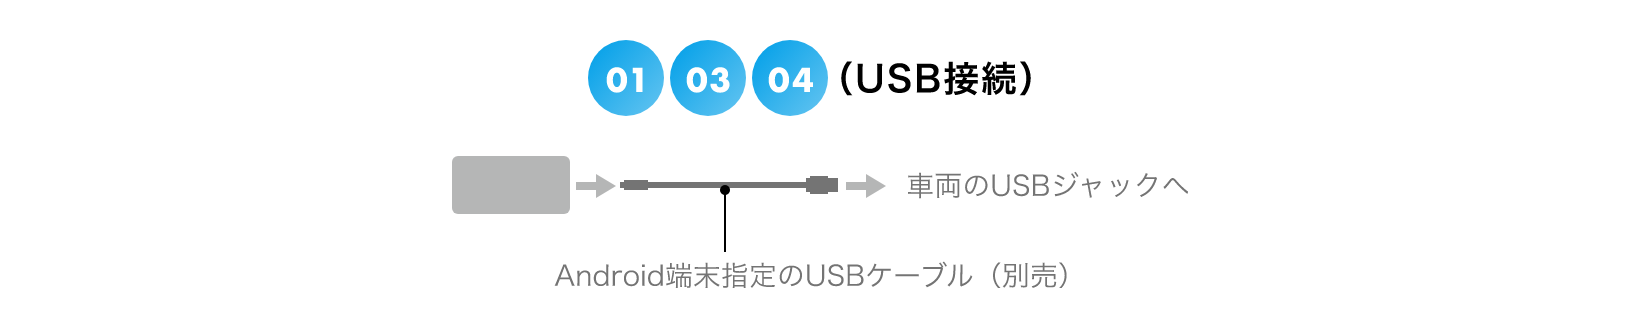 01 03 04（USB接続）